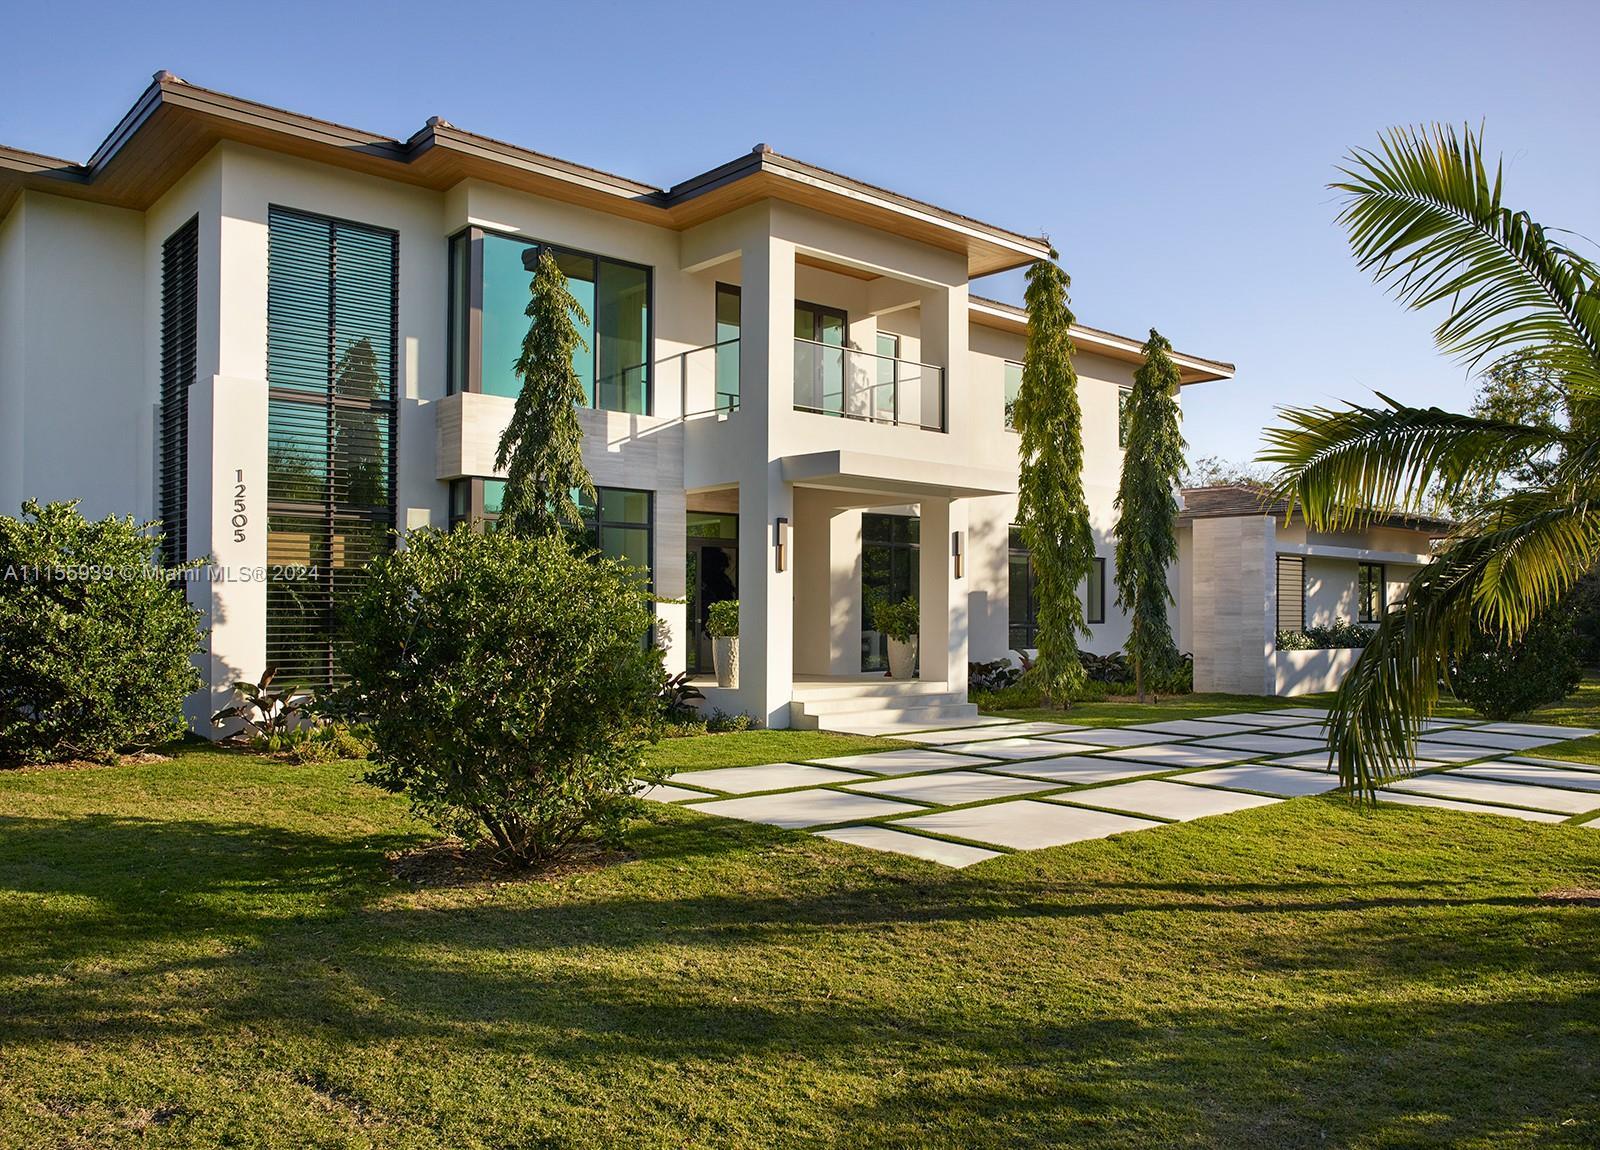 Turnkey Florida modern new construction by award winning Hollub Homes, on an idyllic Pinecrest stree